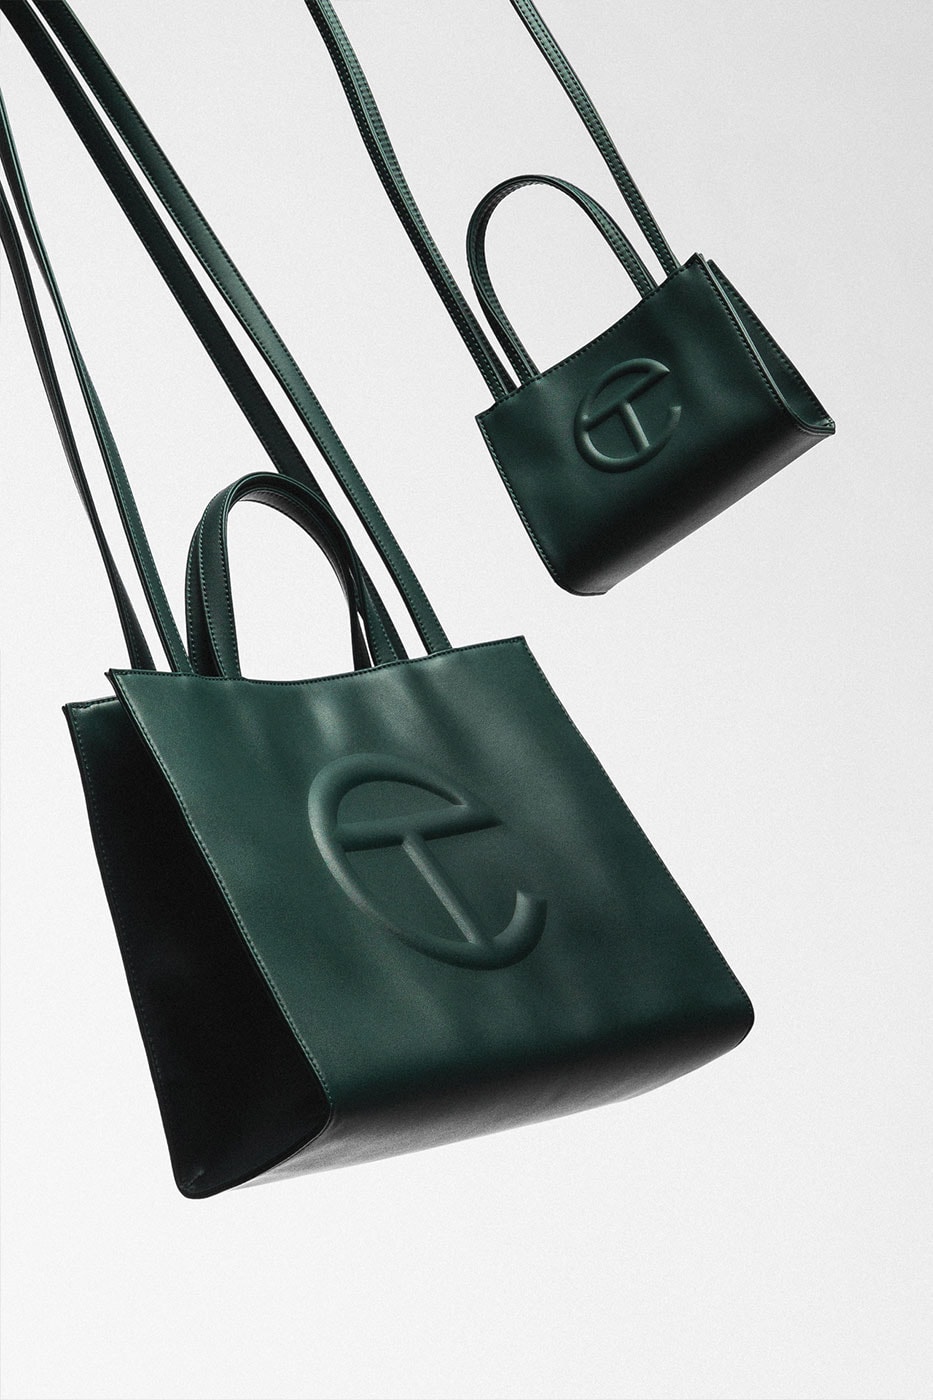 Ugg x Telfar bag restock: Shop the bag while it's available